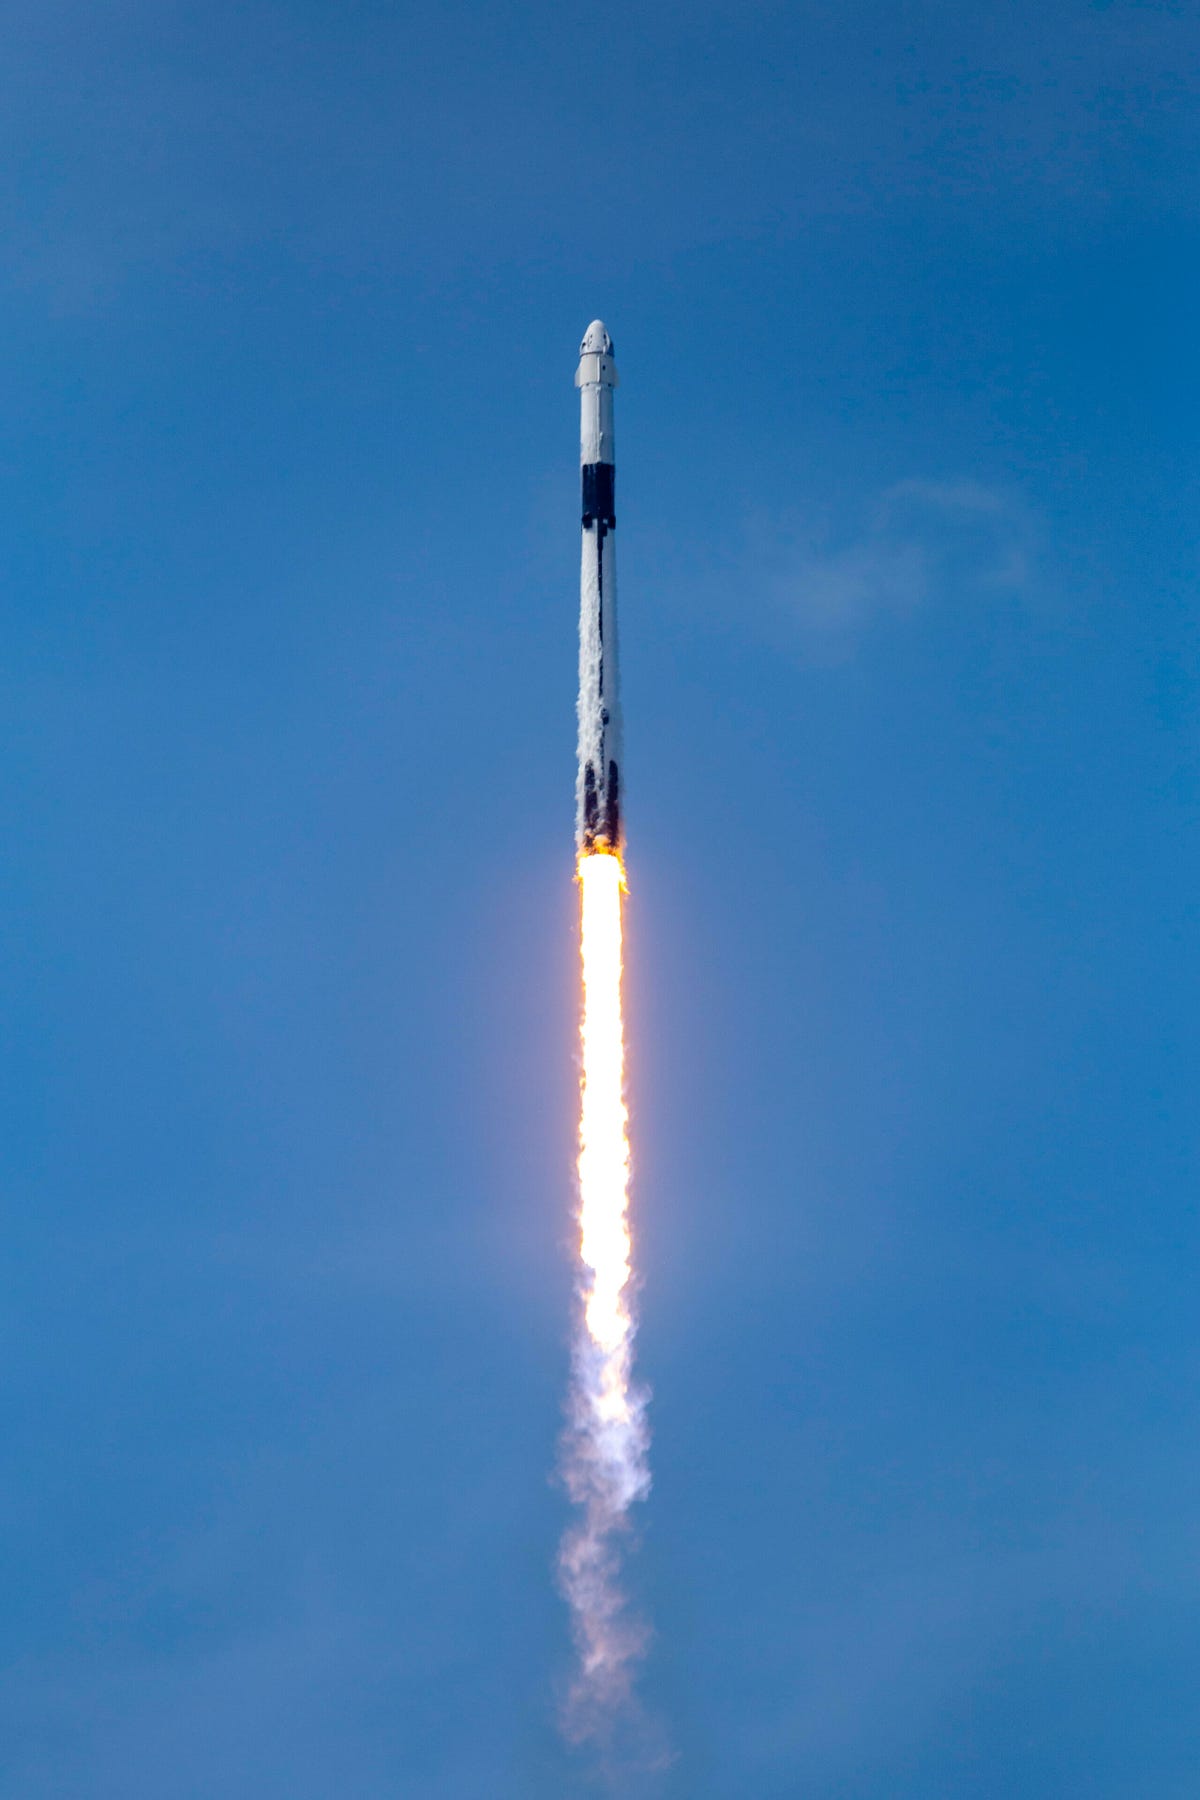 SpaceX's Falcon 9 rocket blasts upward to propel the Crew Dragon capsule into orbit.